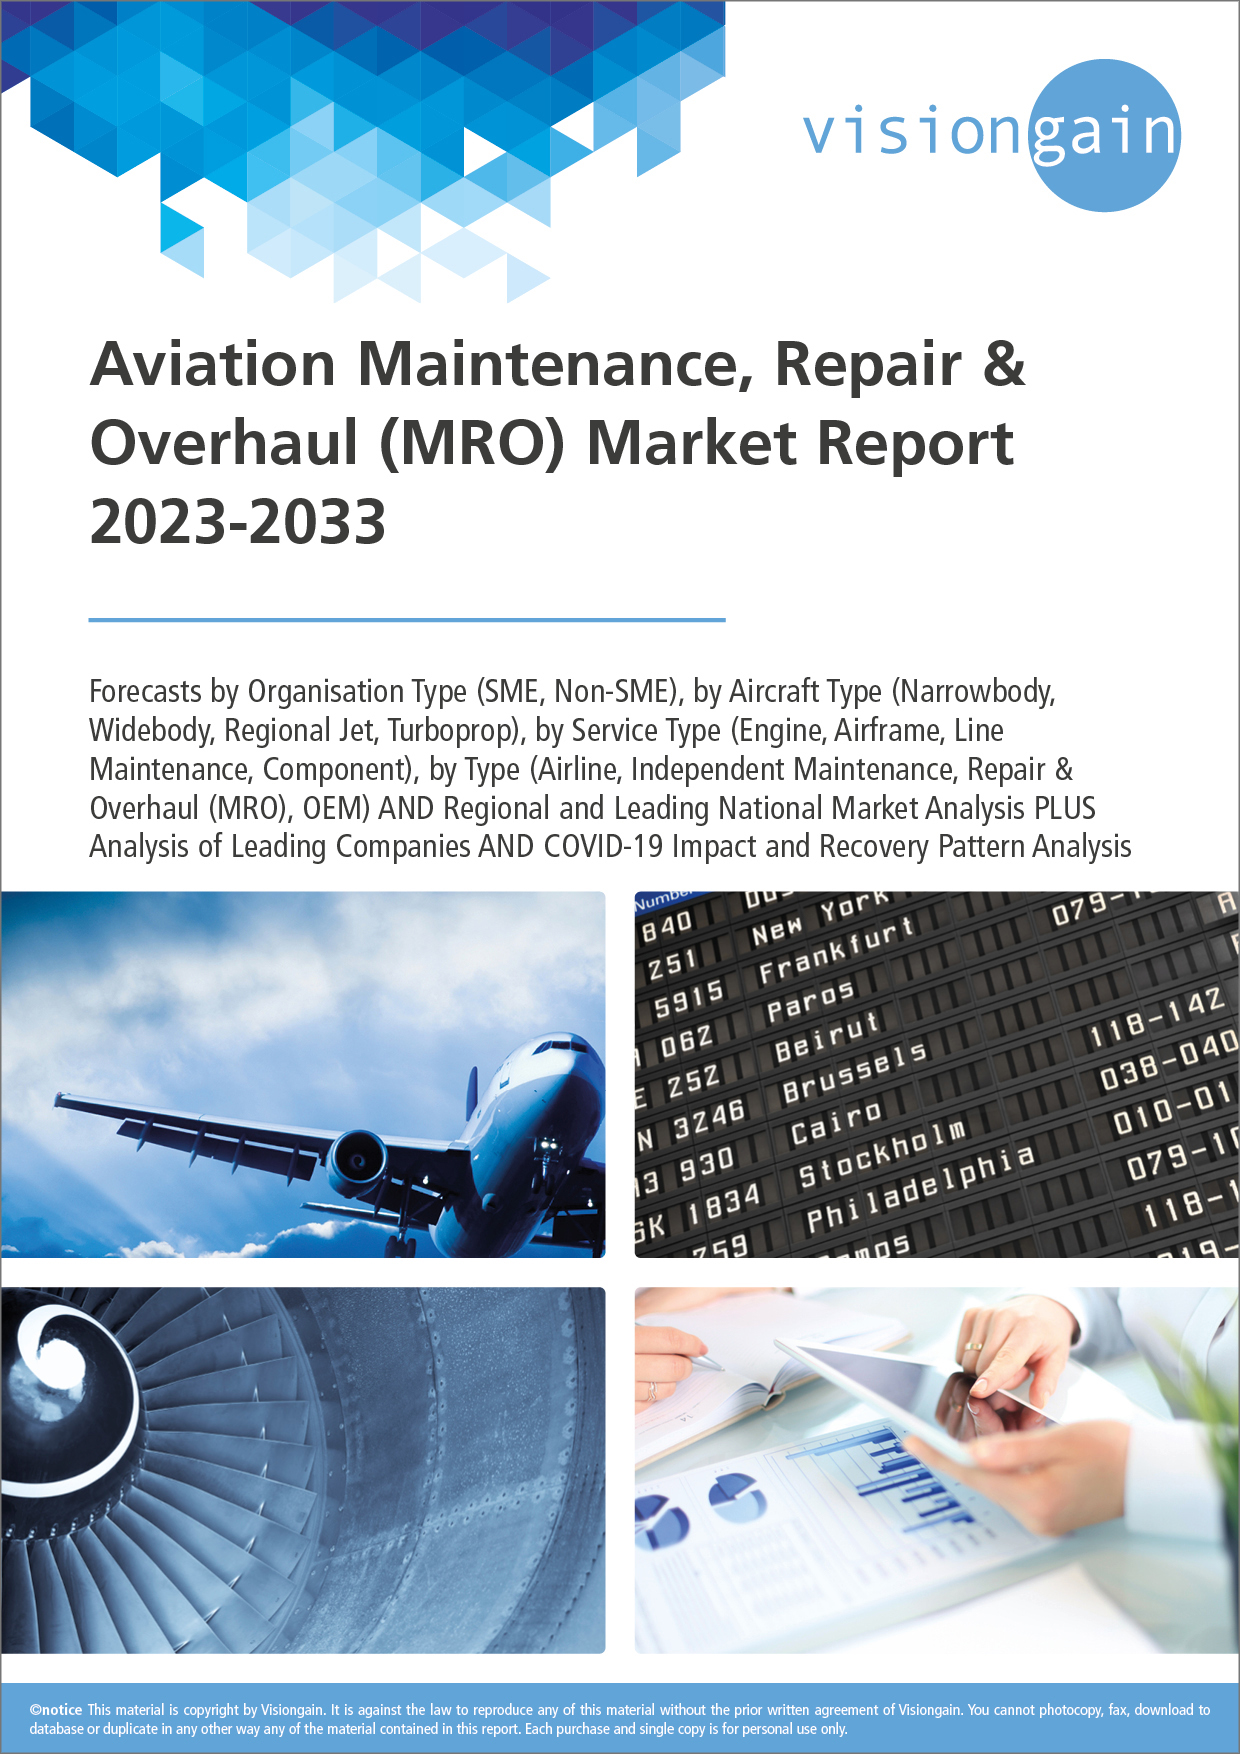 Aviation Maintenance, Repair & Overhaul (MRO) Market Report 2023-2033